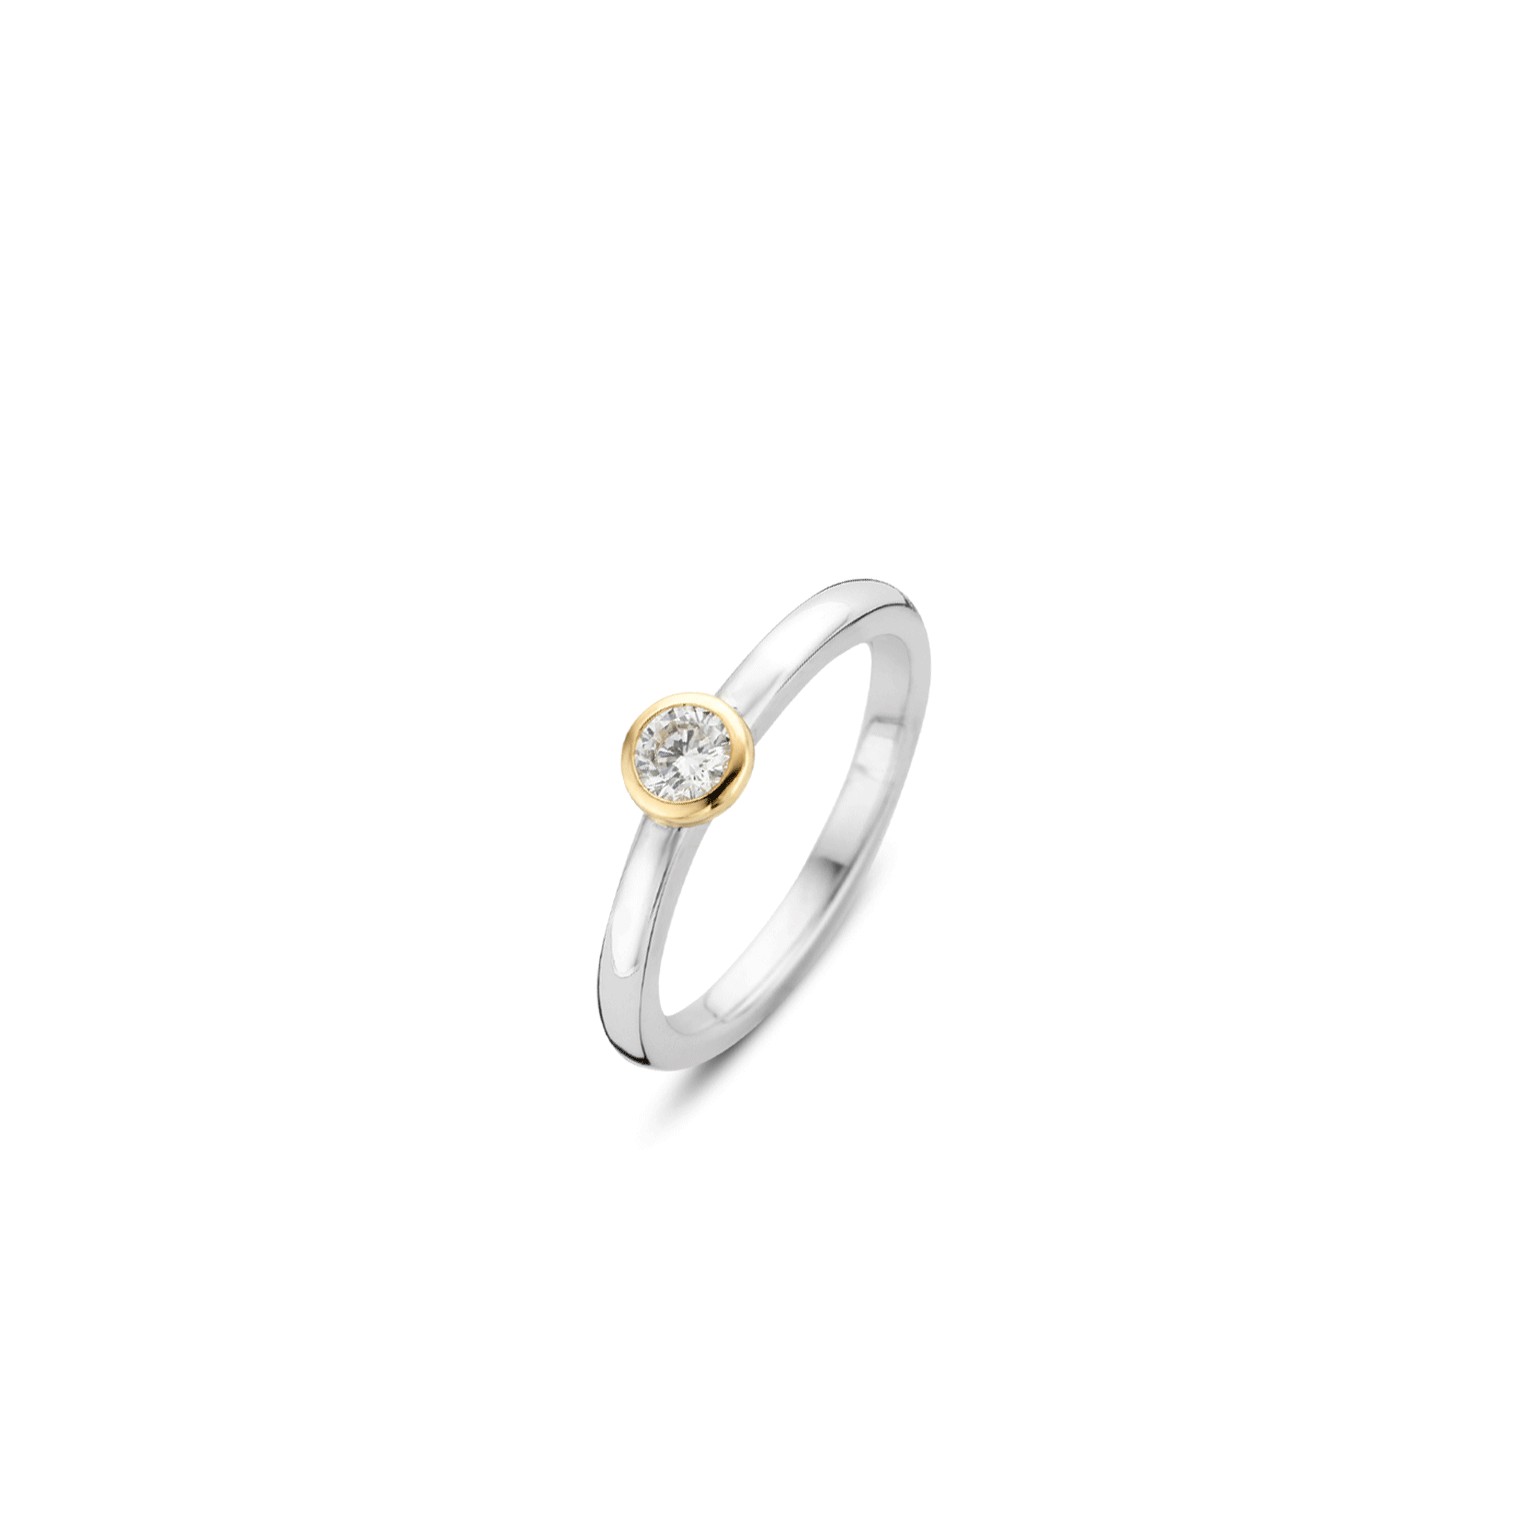 TI SENTO - Milano Ring 1868ZY Gala Jewelers Inc. White Oak, PA